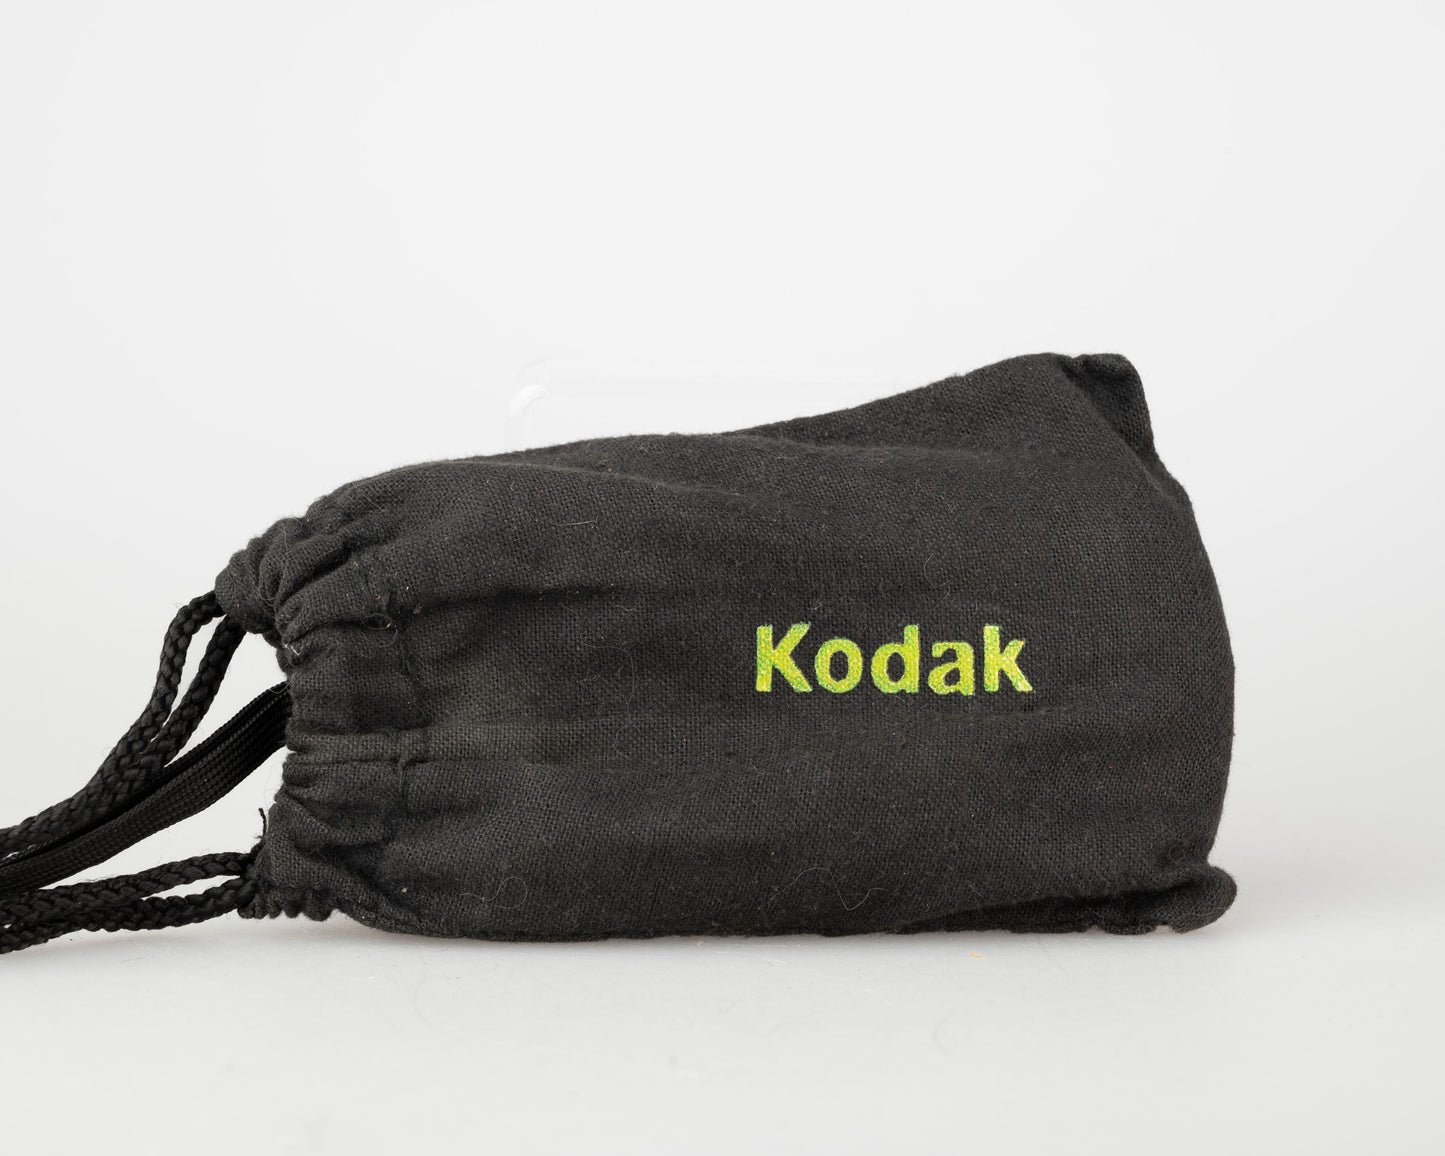 Kodak Cameo Motordrive 35mm camera w/ case (serial 0225021)